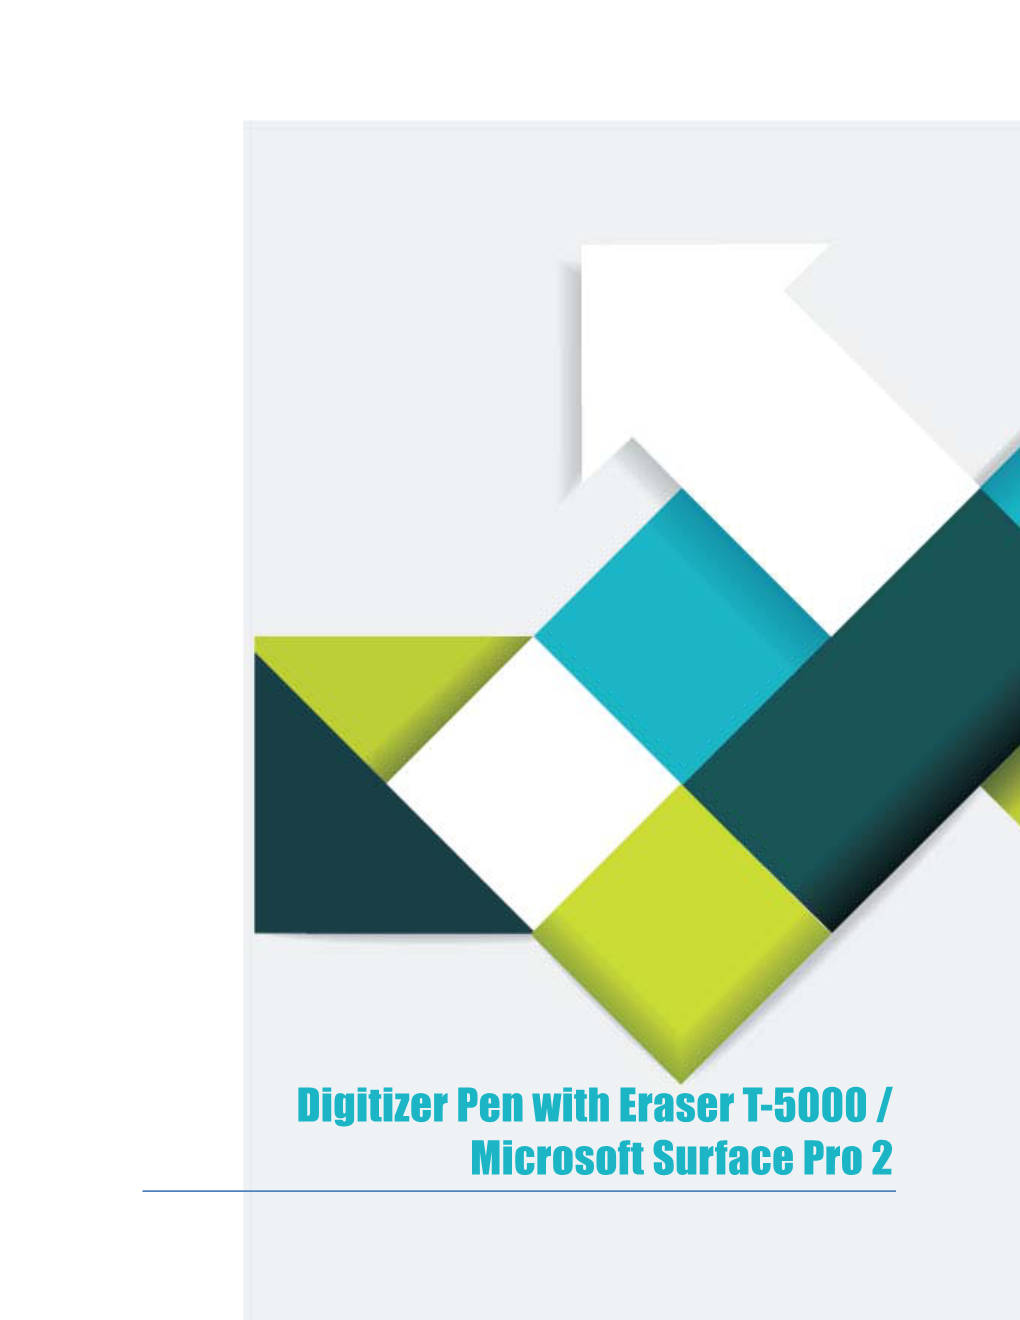 Digitizer Pen with Eraser T-5000 / Microsoft Surface Pro 2